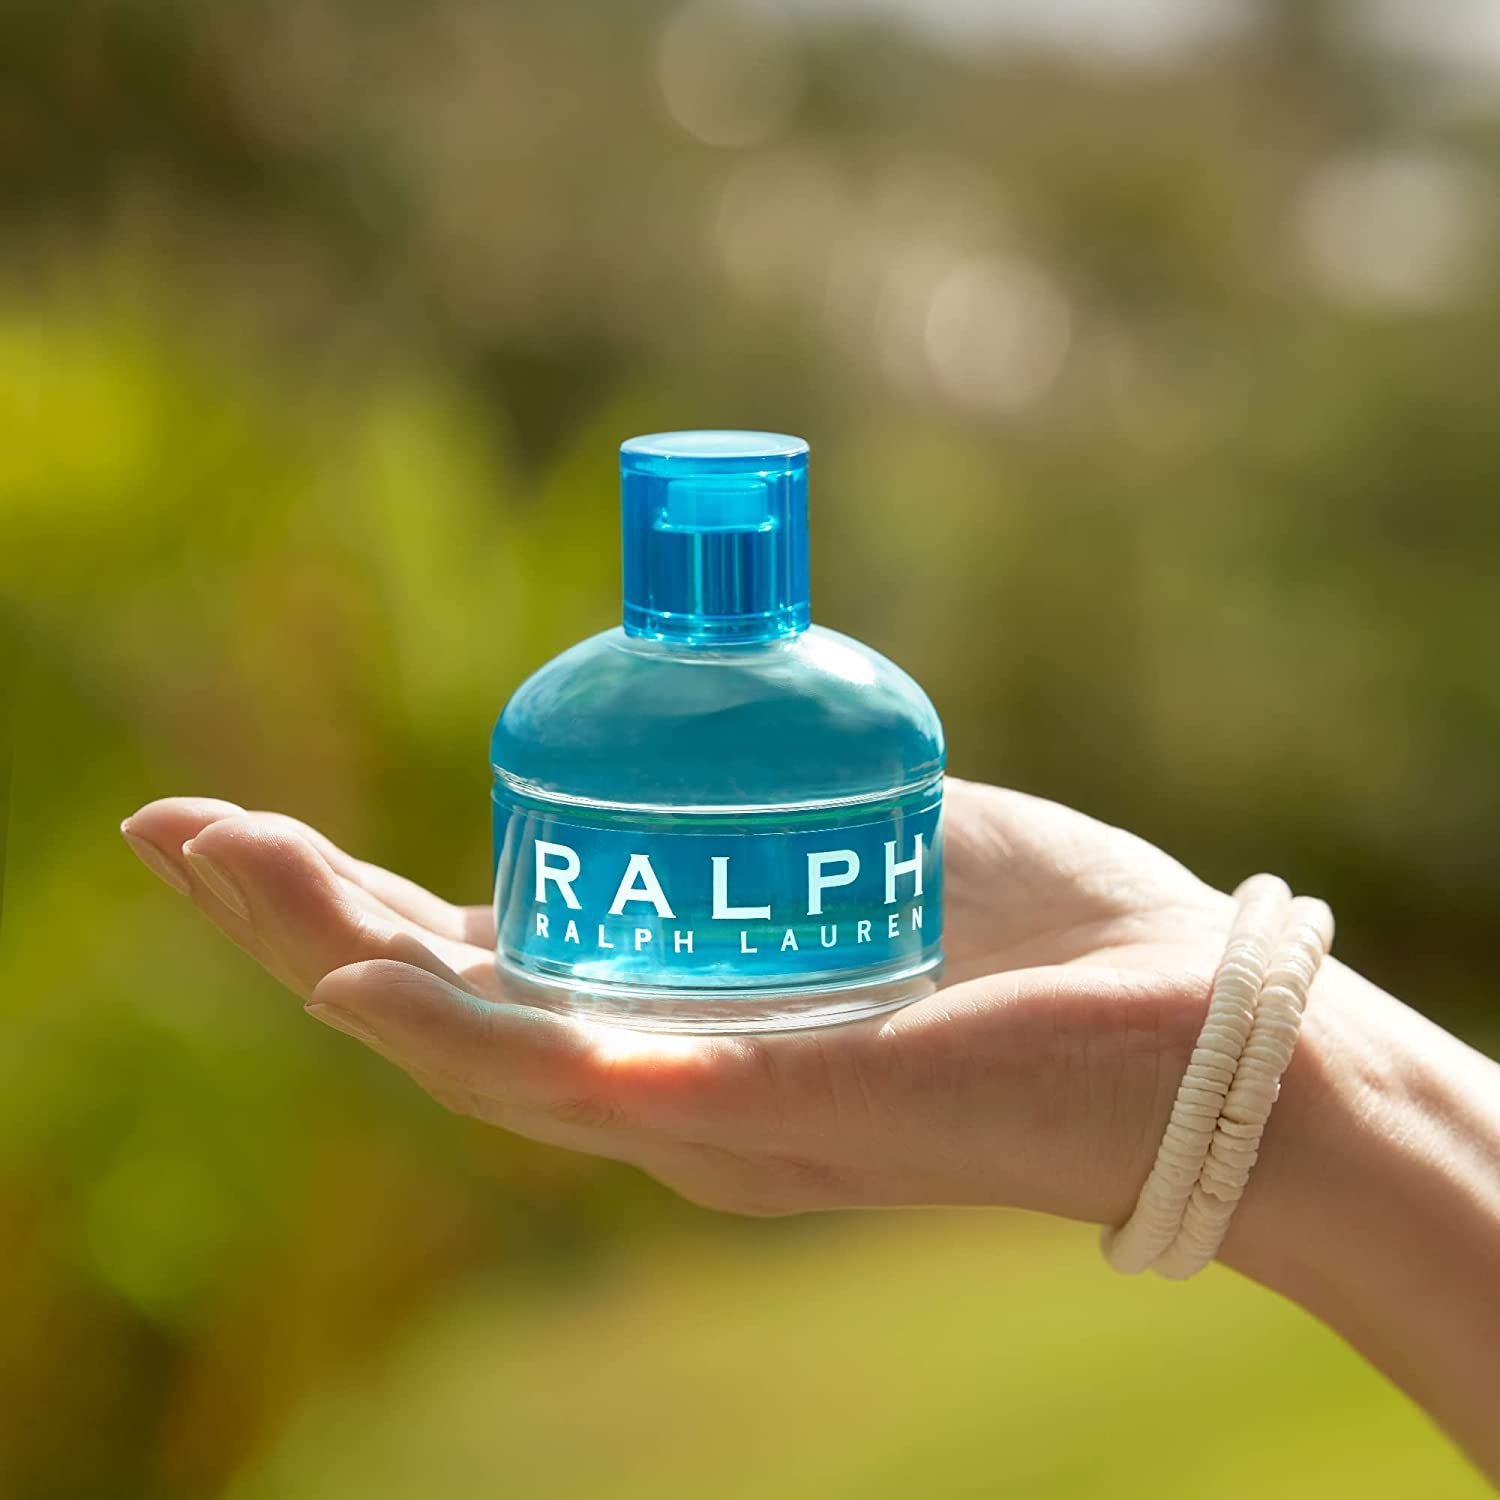 Ralph Lauren - Ralph - Eau de Toilette - Women's Perfume - Fresh & Floral - With Magnolia, Apple, and Iris - Medium Intensity